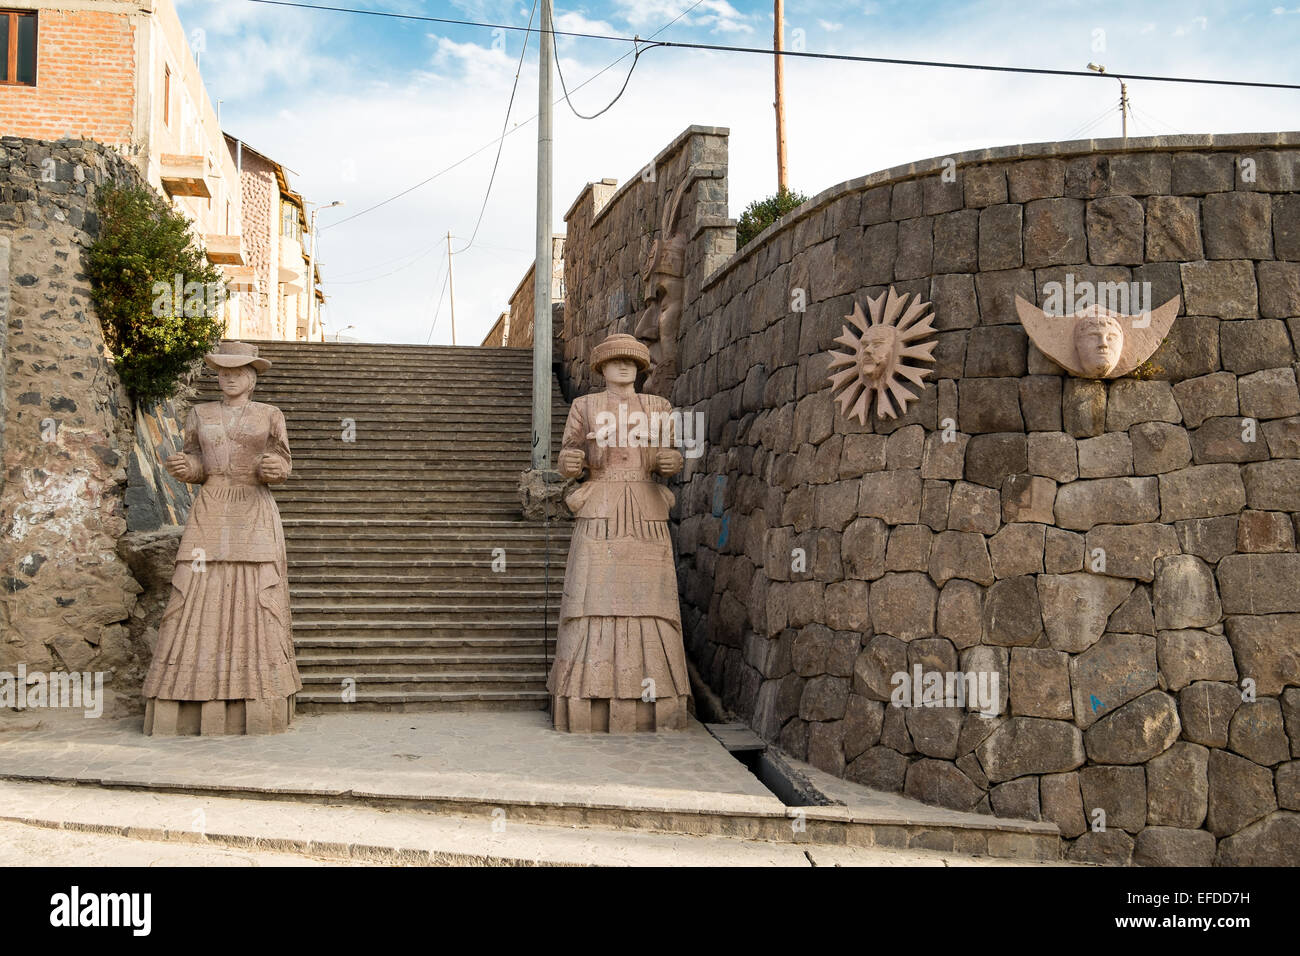 Statues in Chivay, Peru Stock Photo